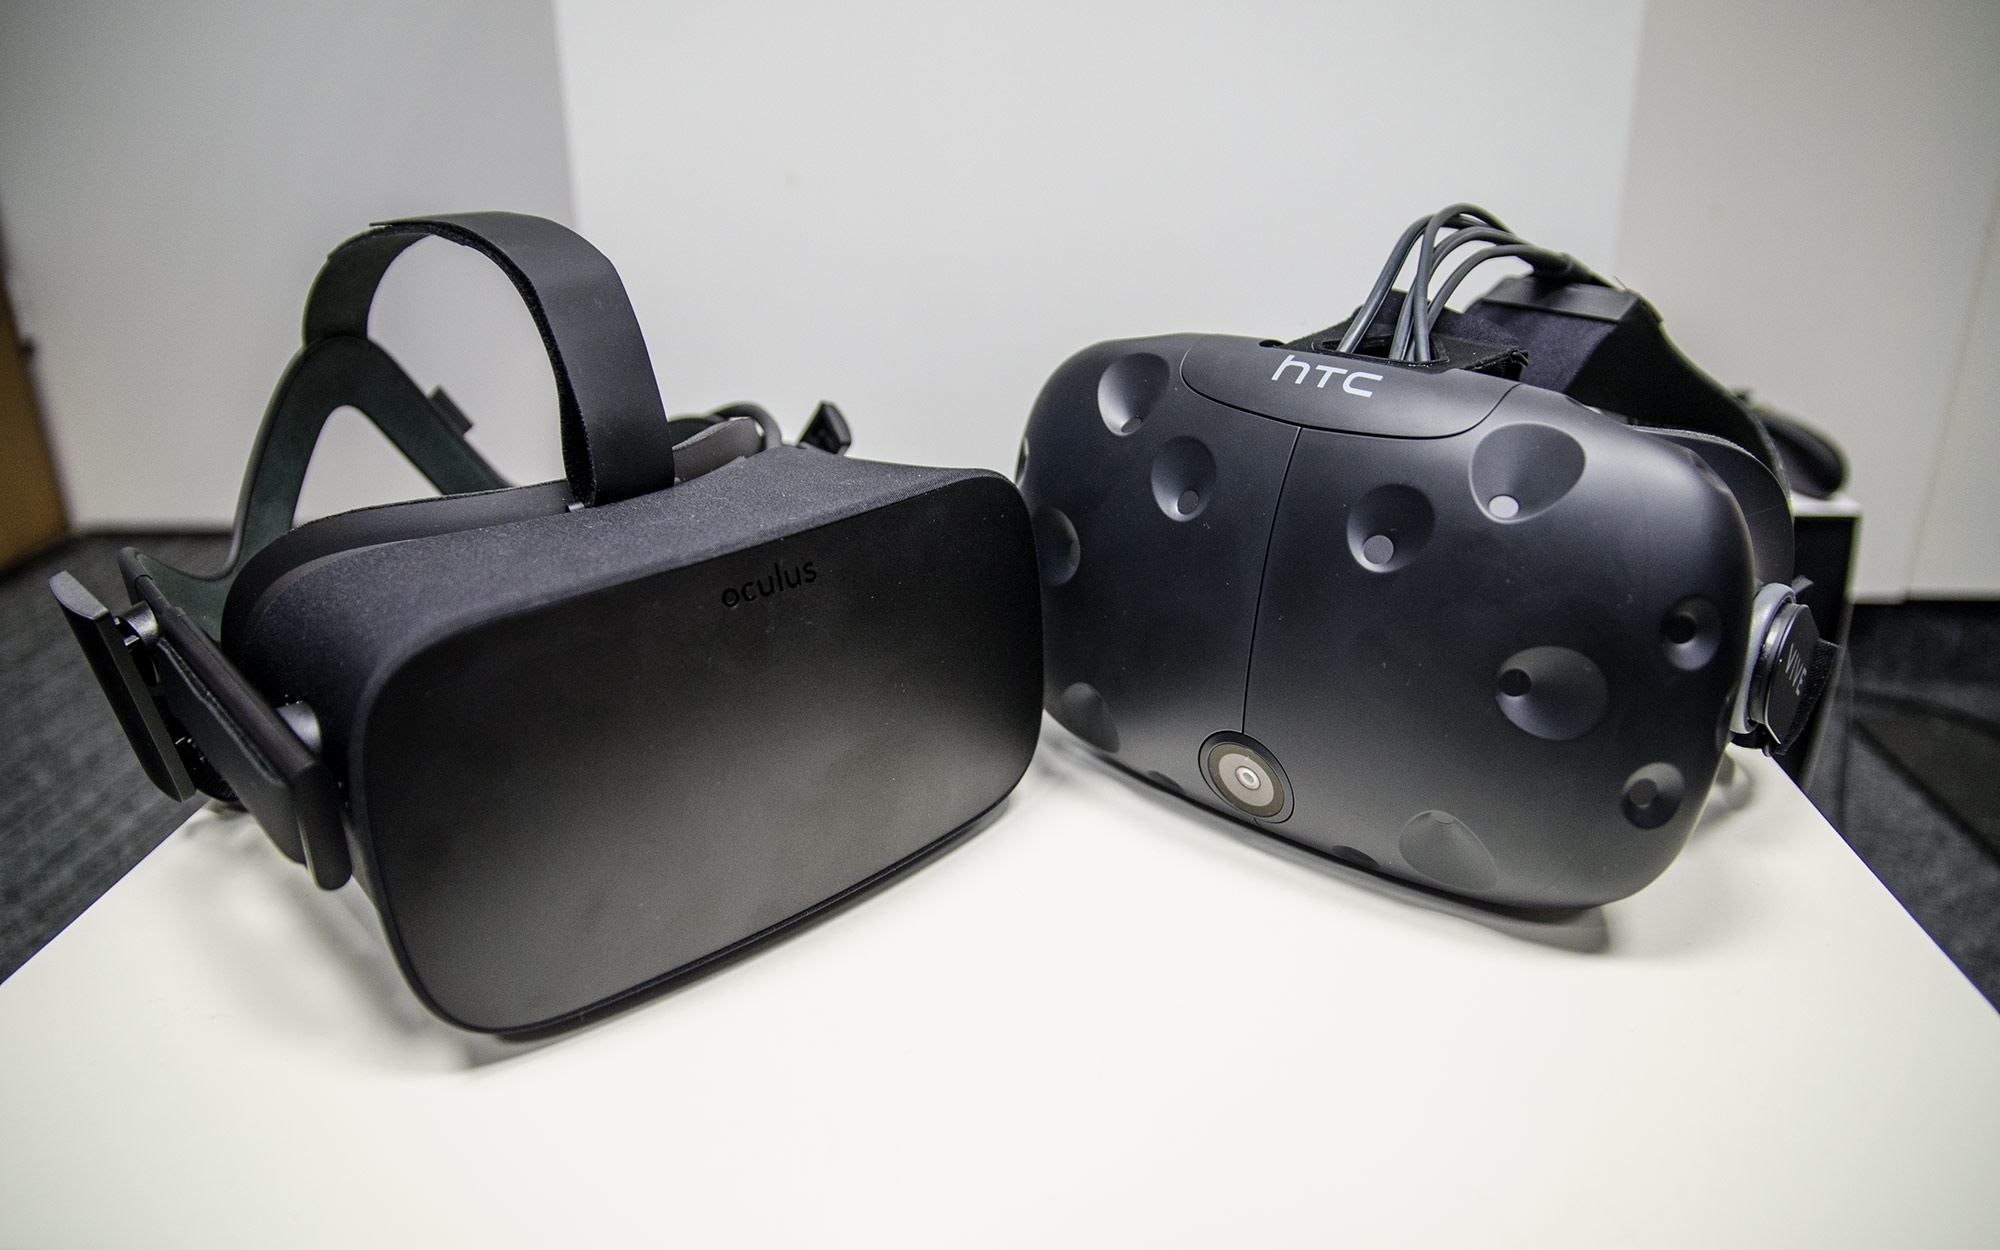 PatchNoteStudio is VR Ready!